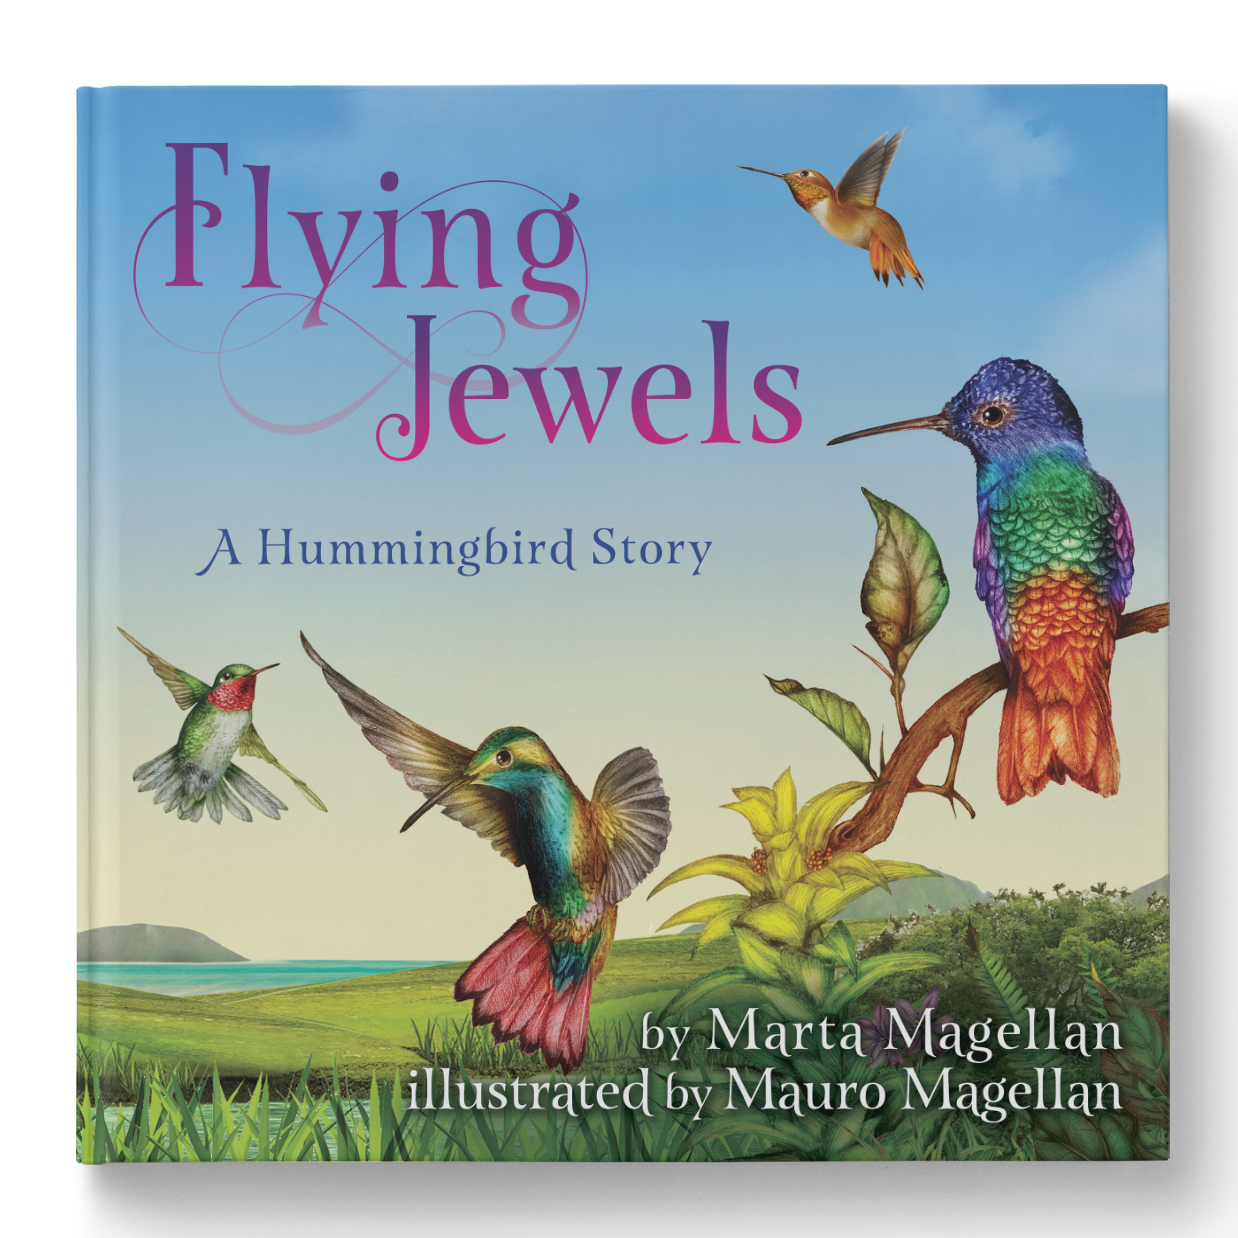 Flying Jewels: A Hummingbird Story